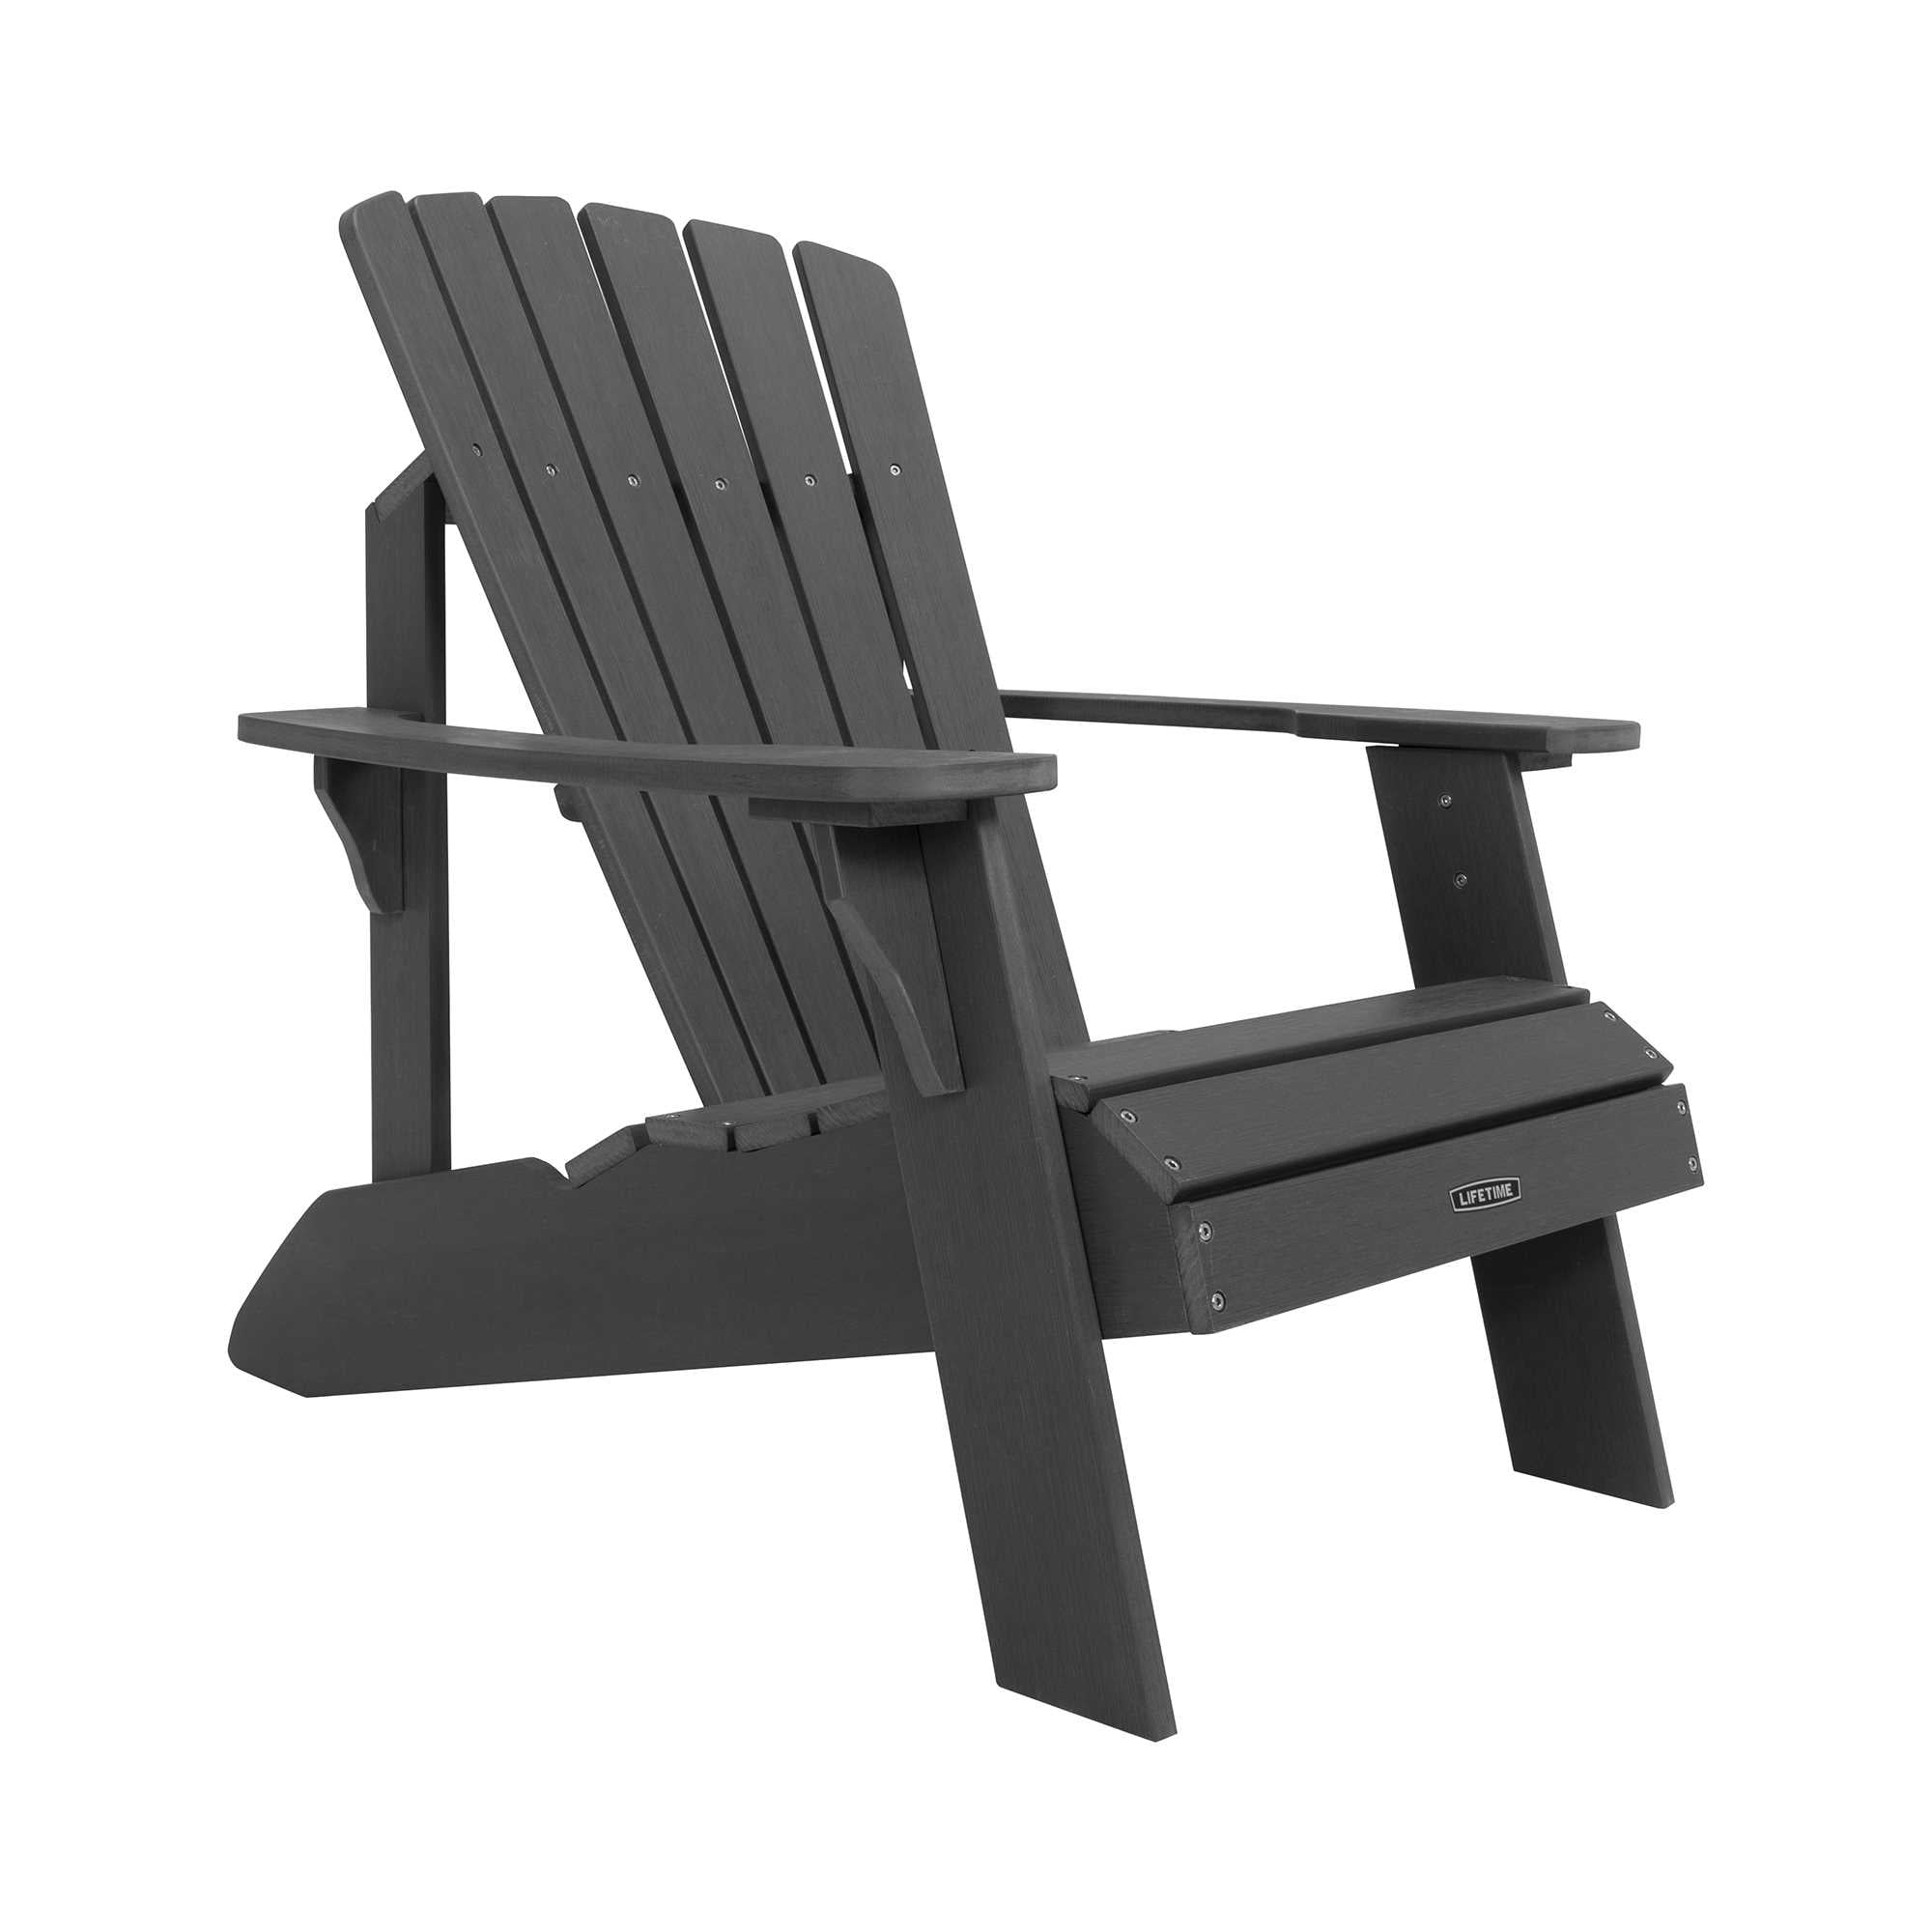 Lifetime Wood Alternative Adirondack Chair - Gray, 60204 - Walmart.com